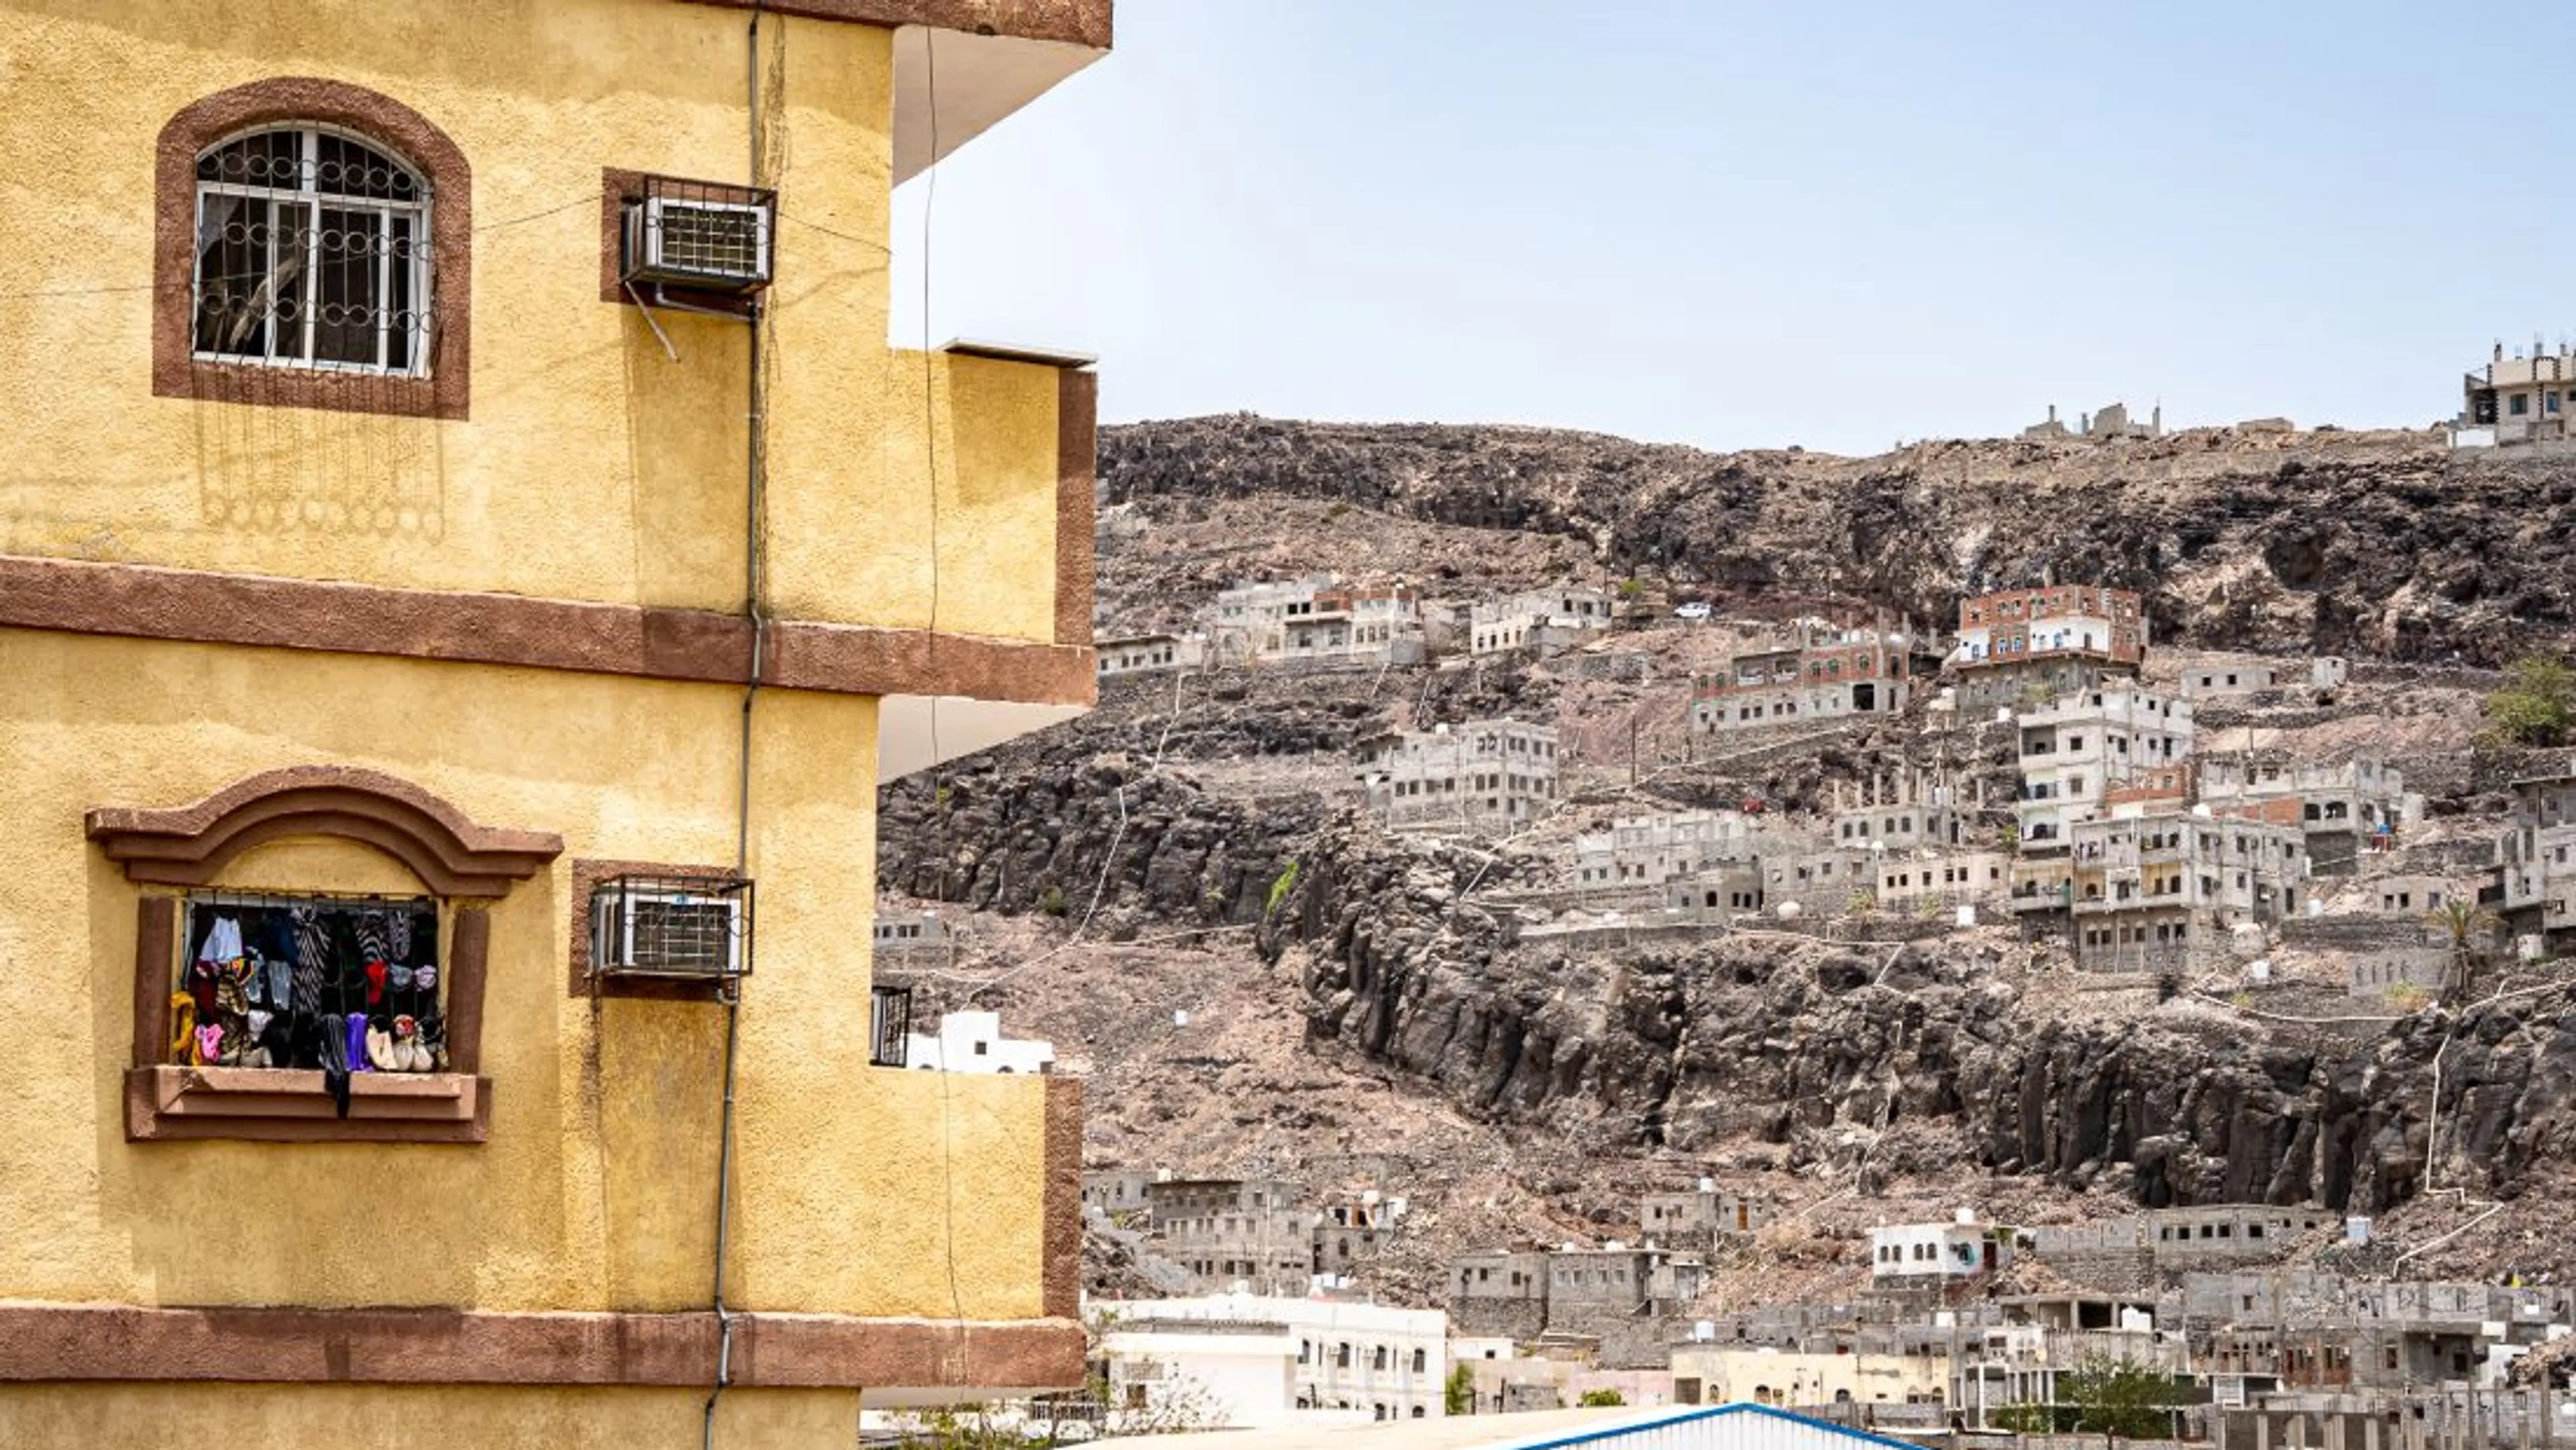 Yemen - buildings